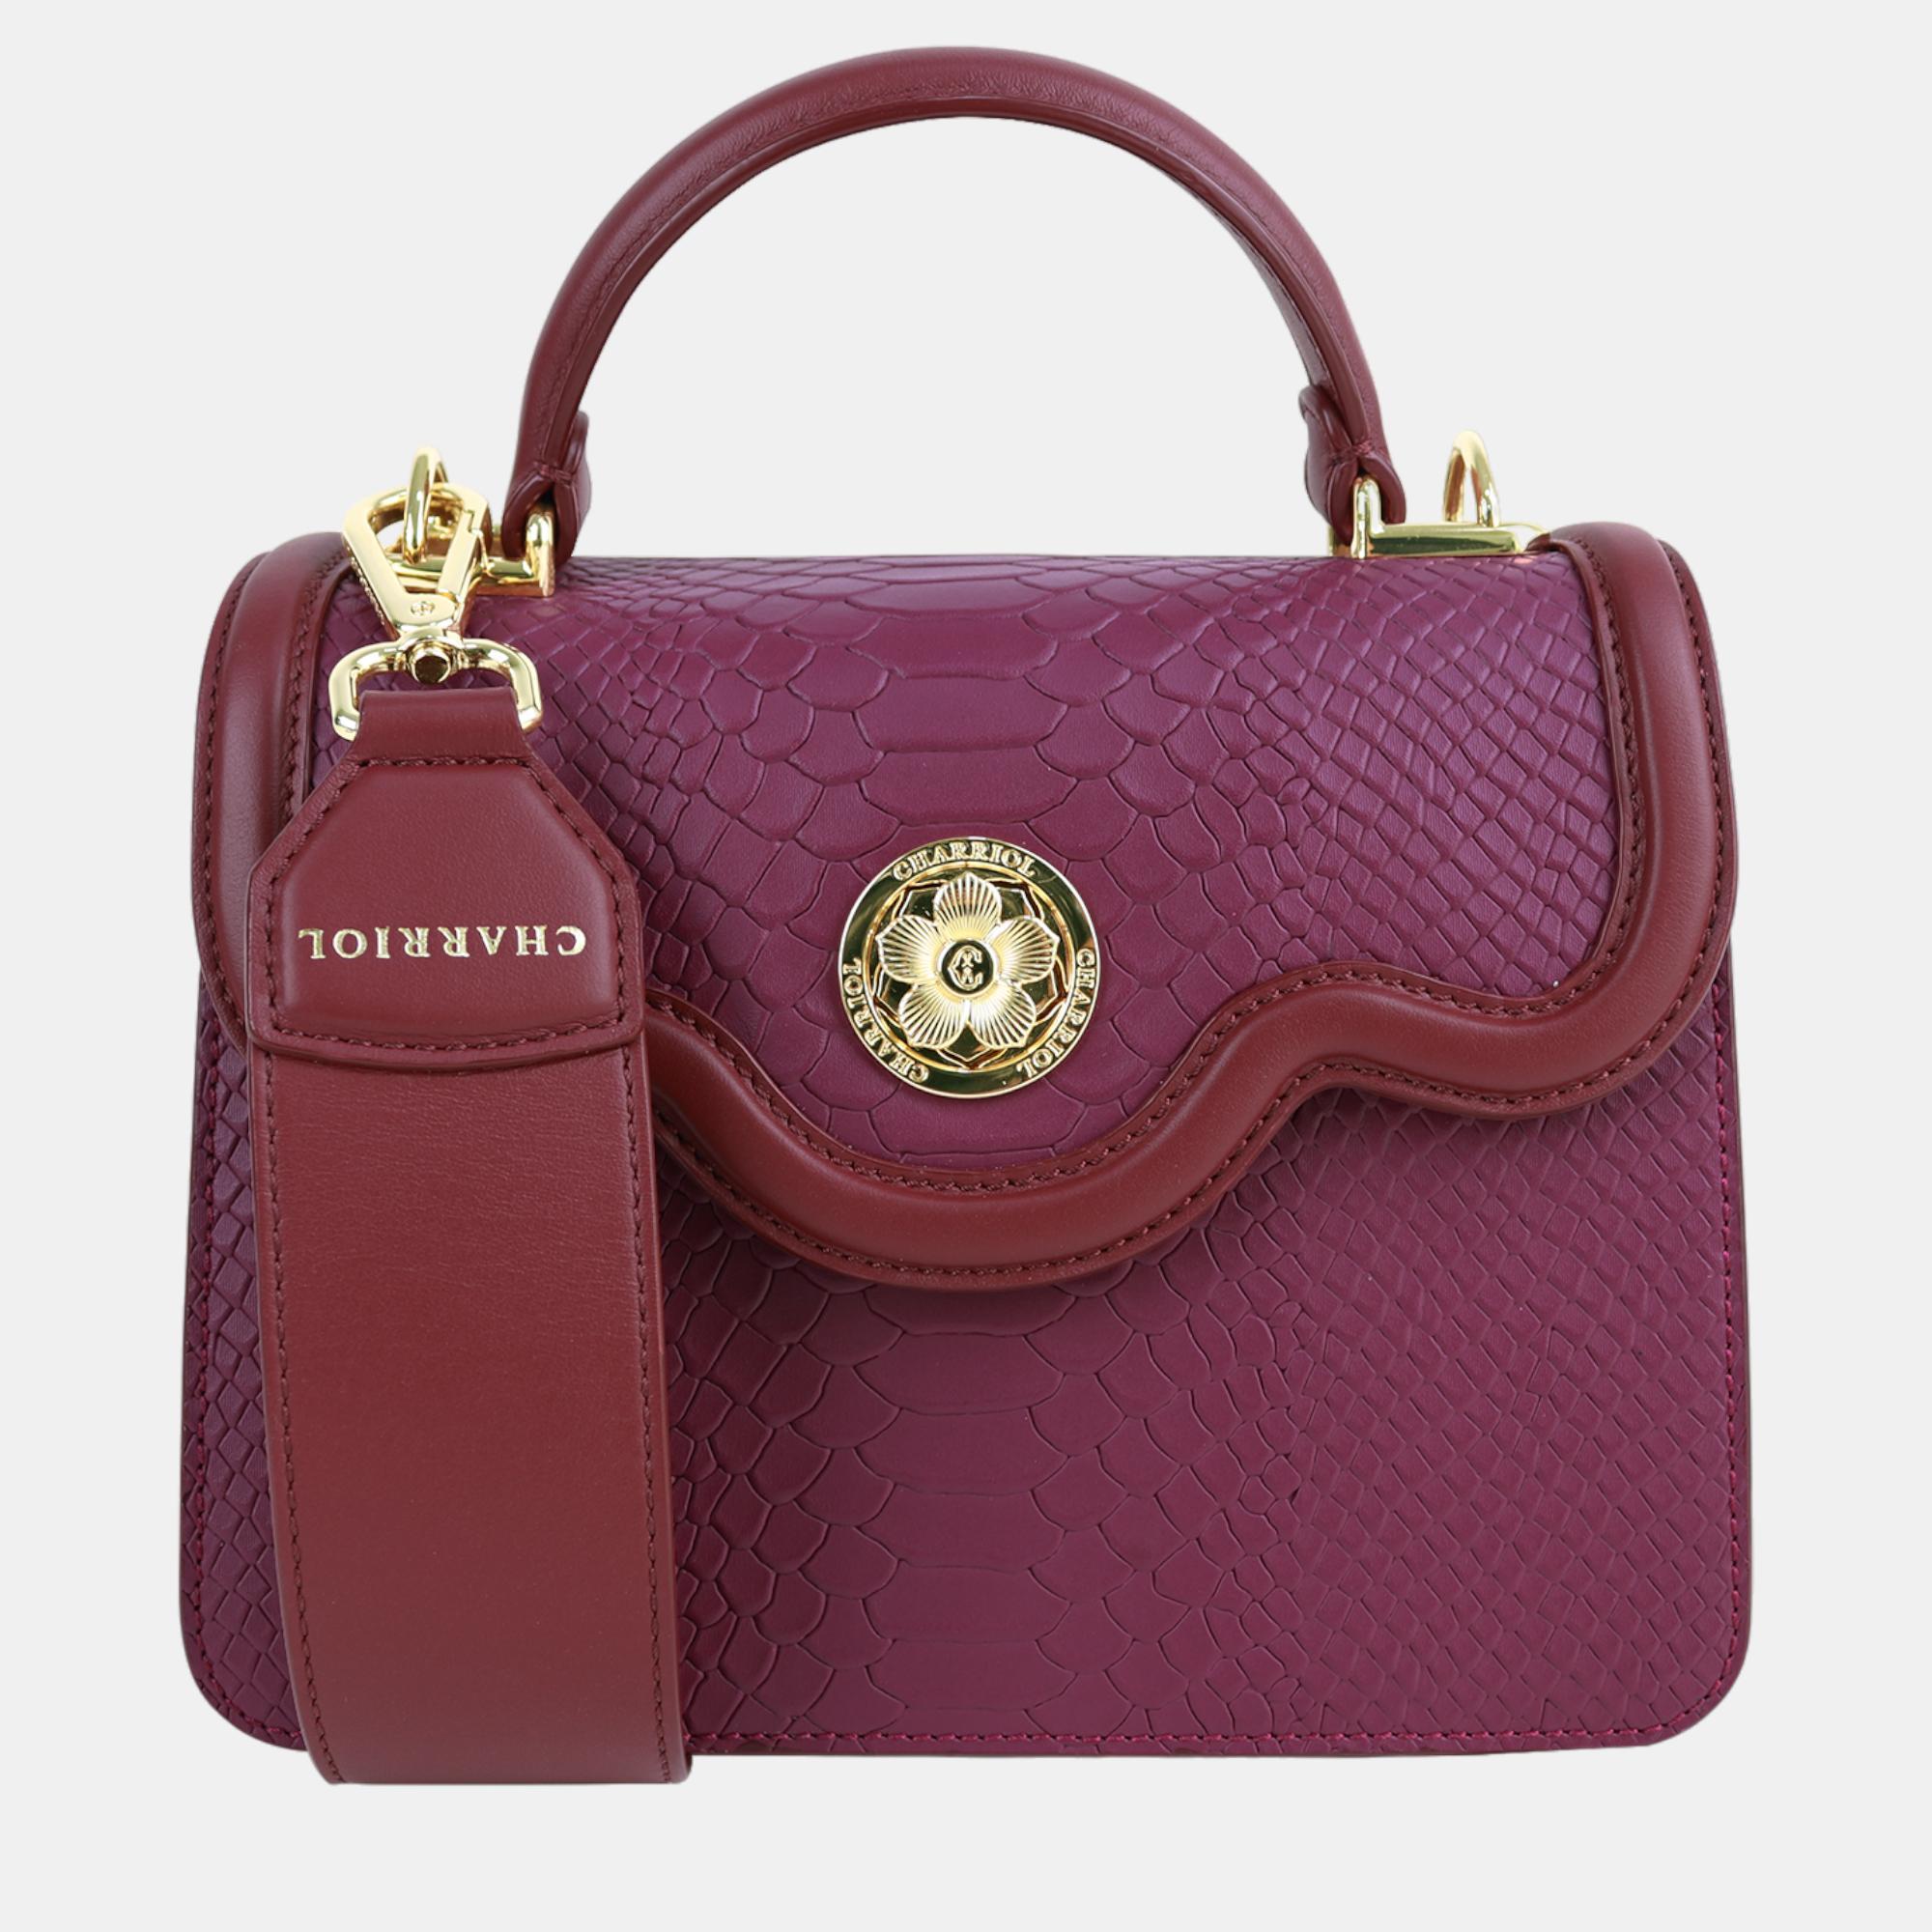 Charriol Mulberry Leather LAETITIA Handbag